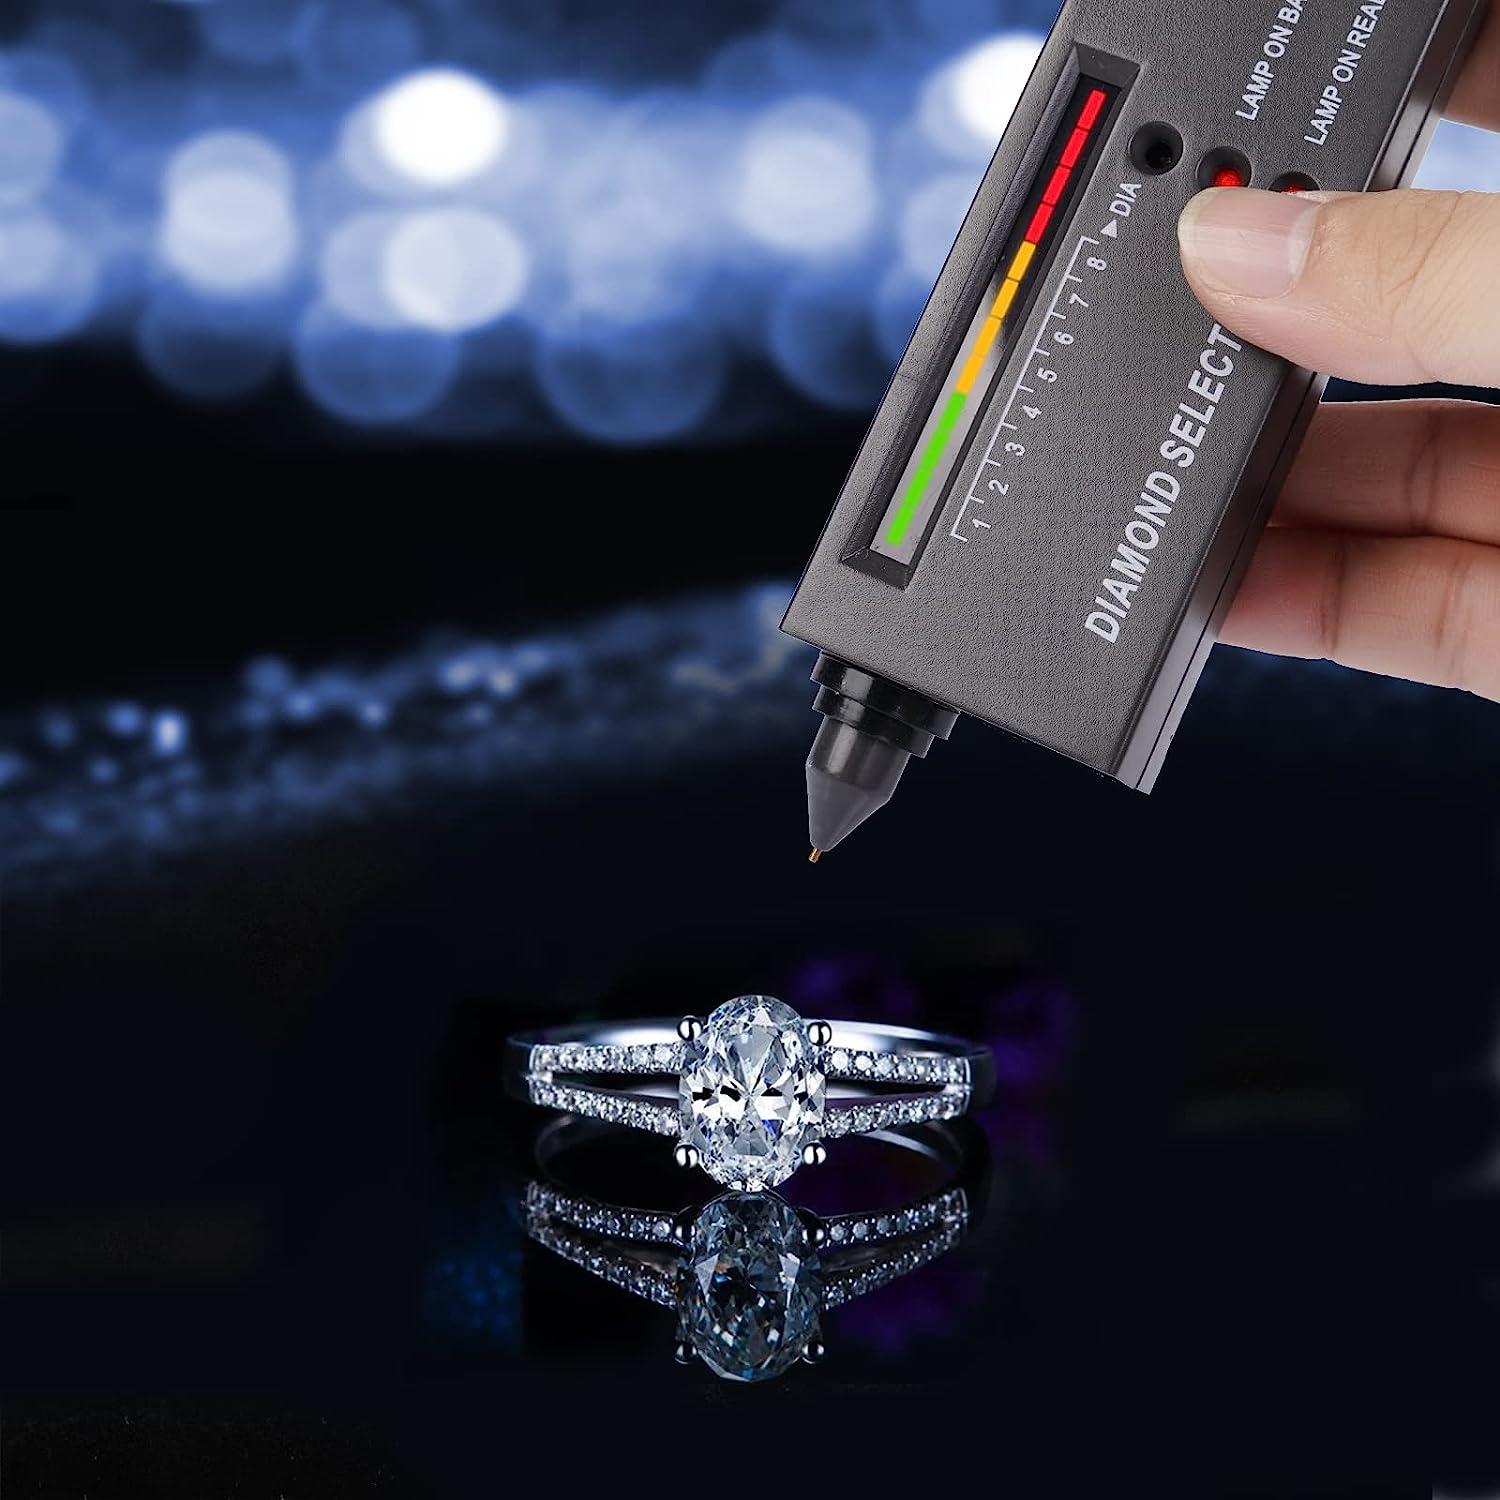 TANJIN [Upgraded] Diamond Tester Pen, High Accuracy Jewelry Diamond Teste  Portable Electronic Diamond Tester Tool for Jewelry Jade Ruby Stone